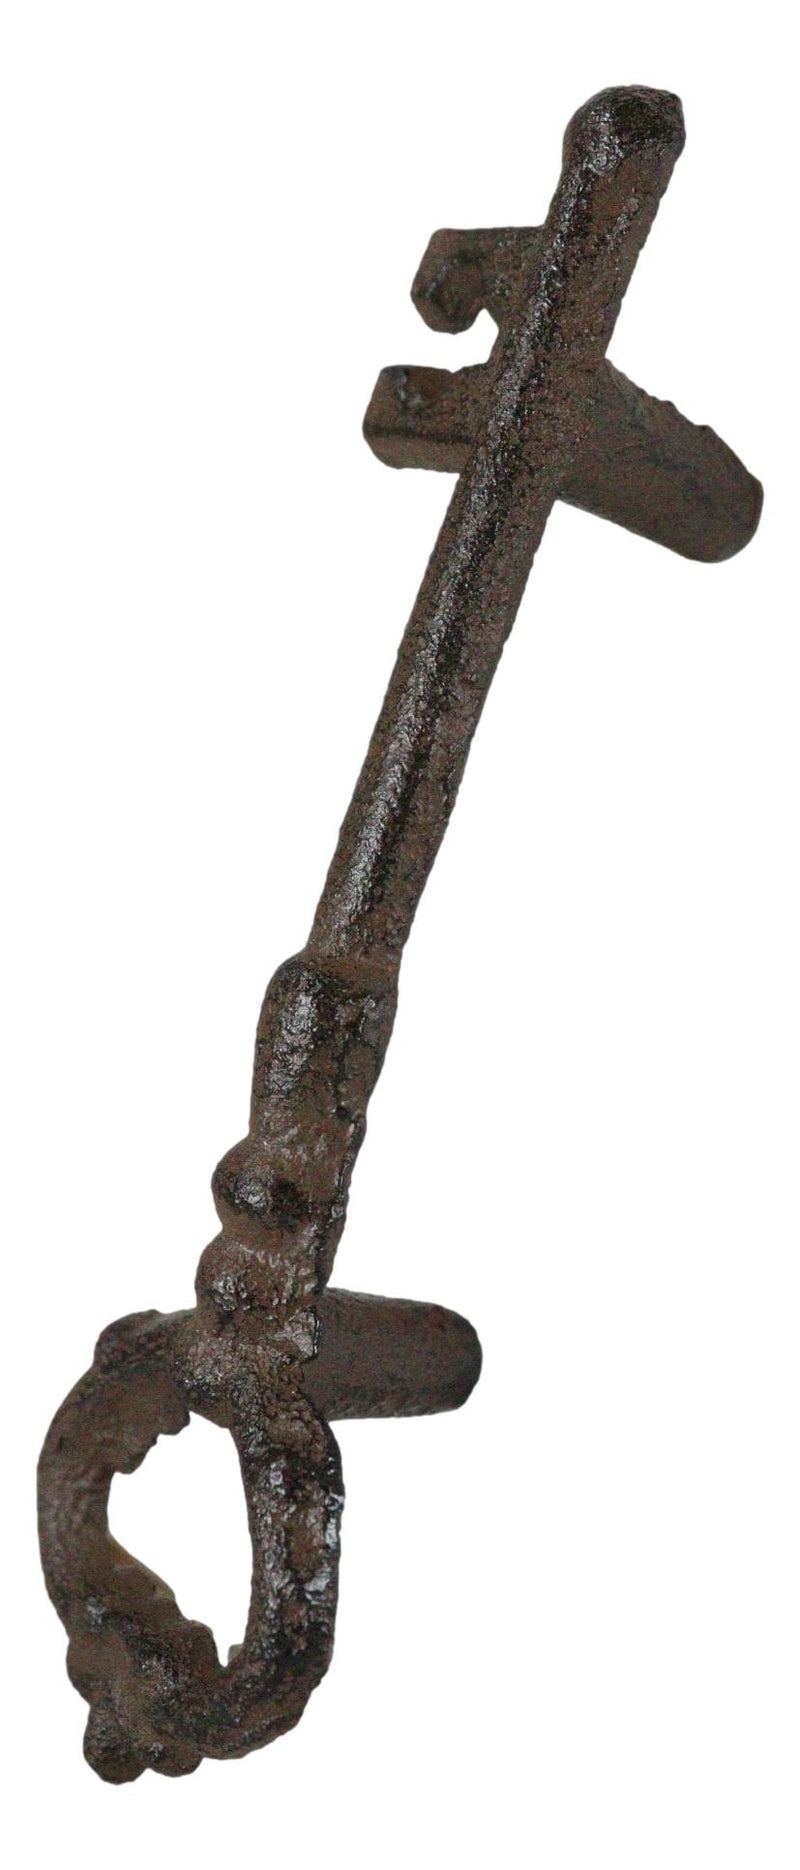 Set of 4 Rustic Cast Iron Decorative Antique Key Shaped Drawer Bar Handle Pulls